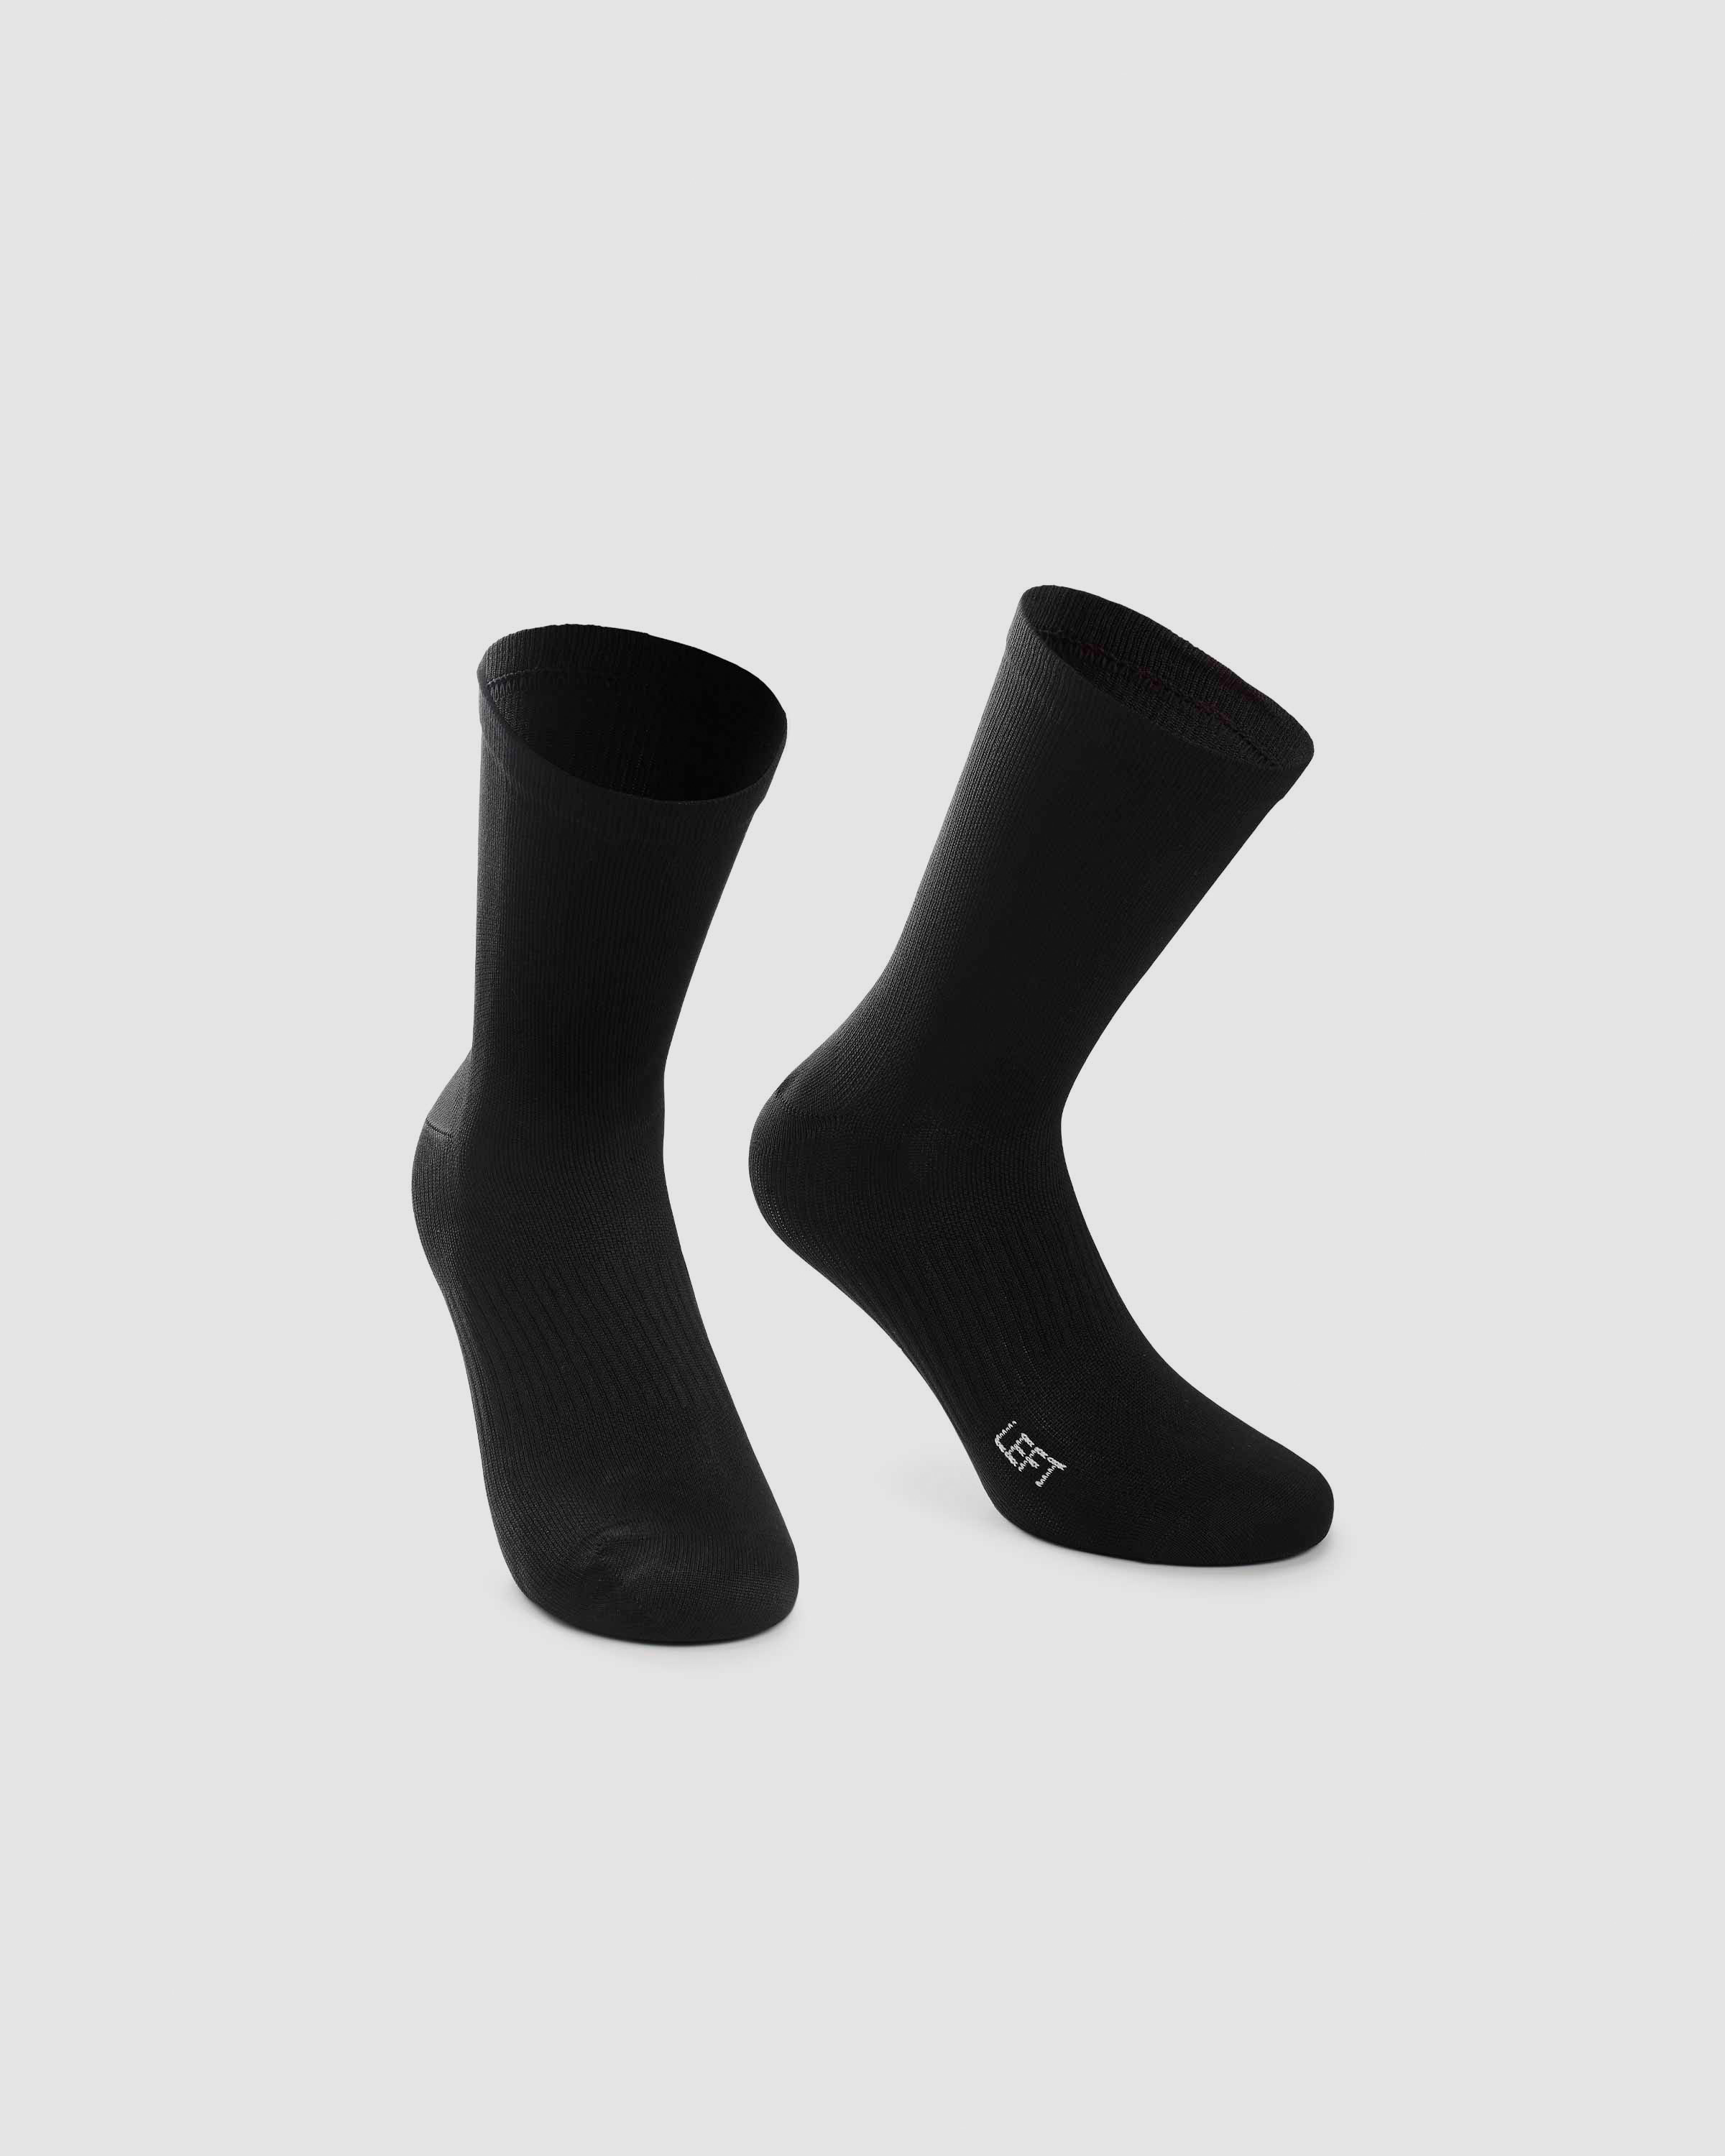 Essence Socks - twin pack, blackSeries » ASSOS Of Switzerland